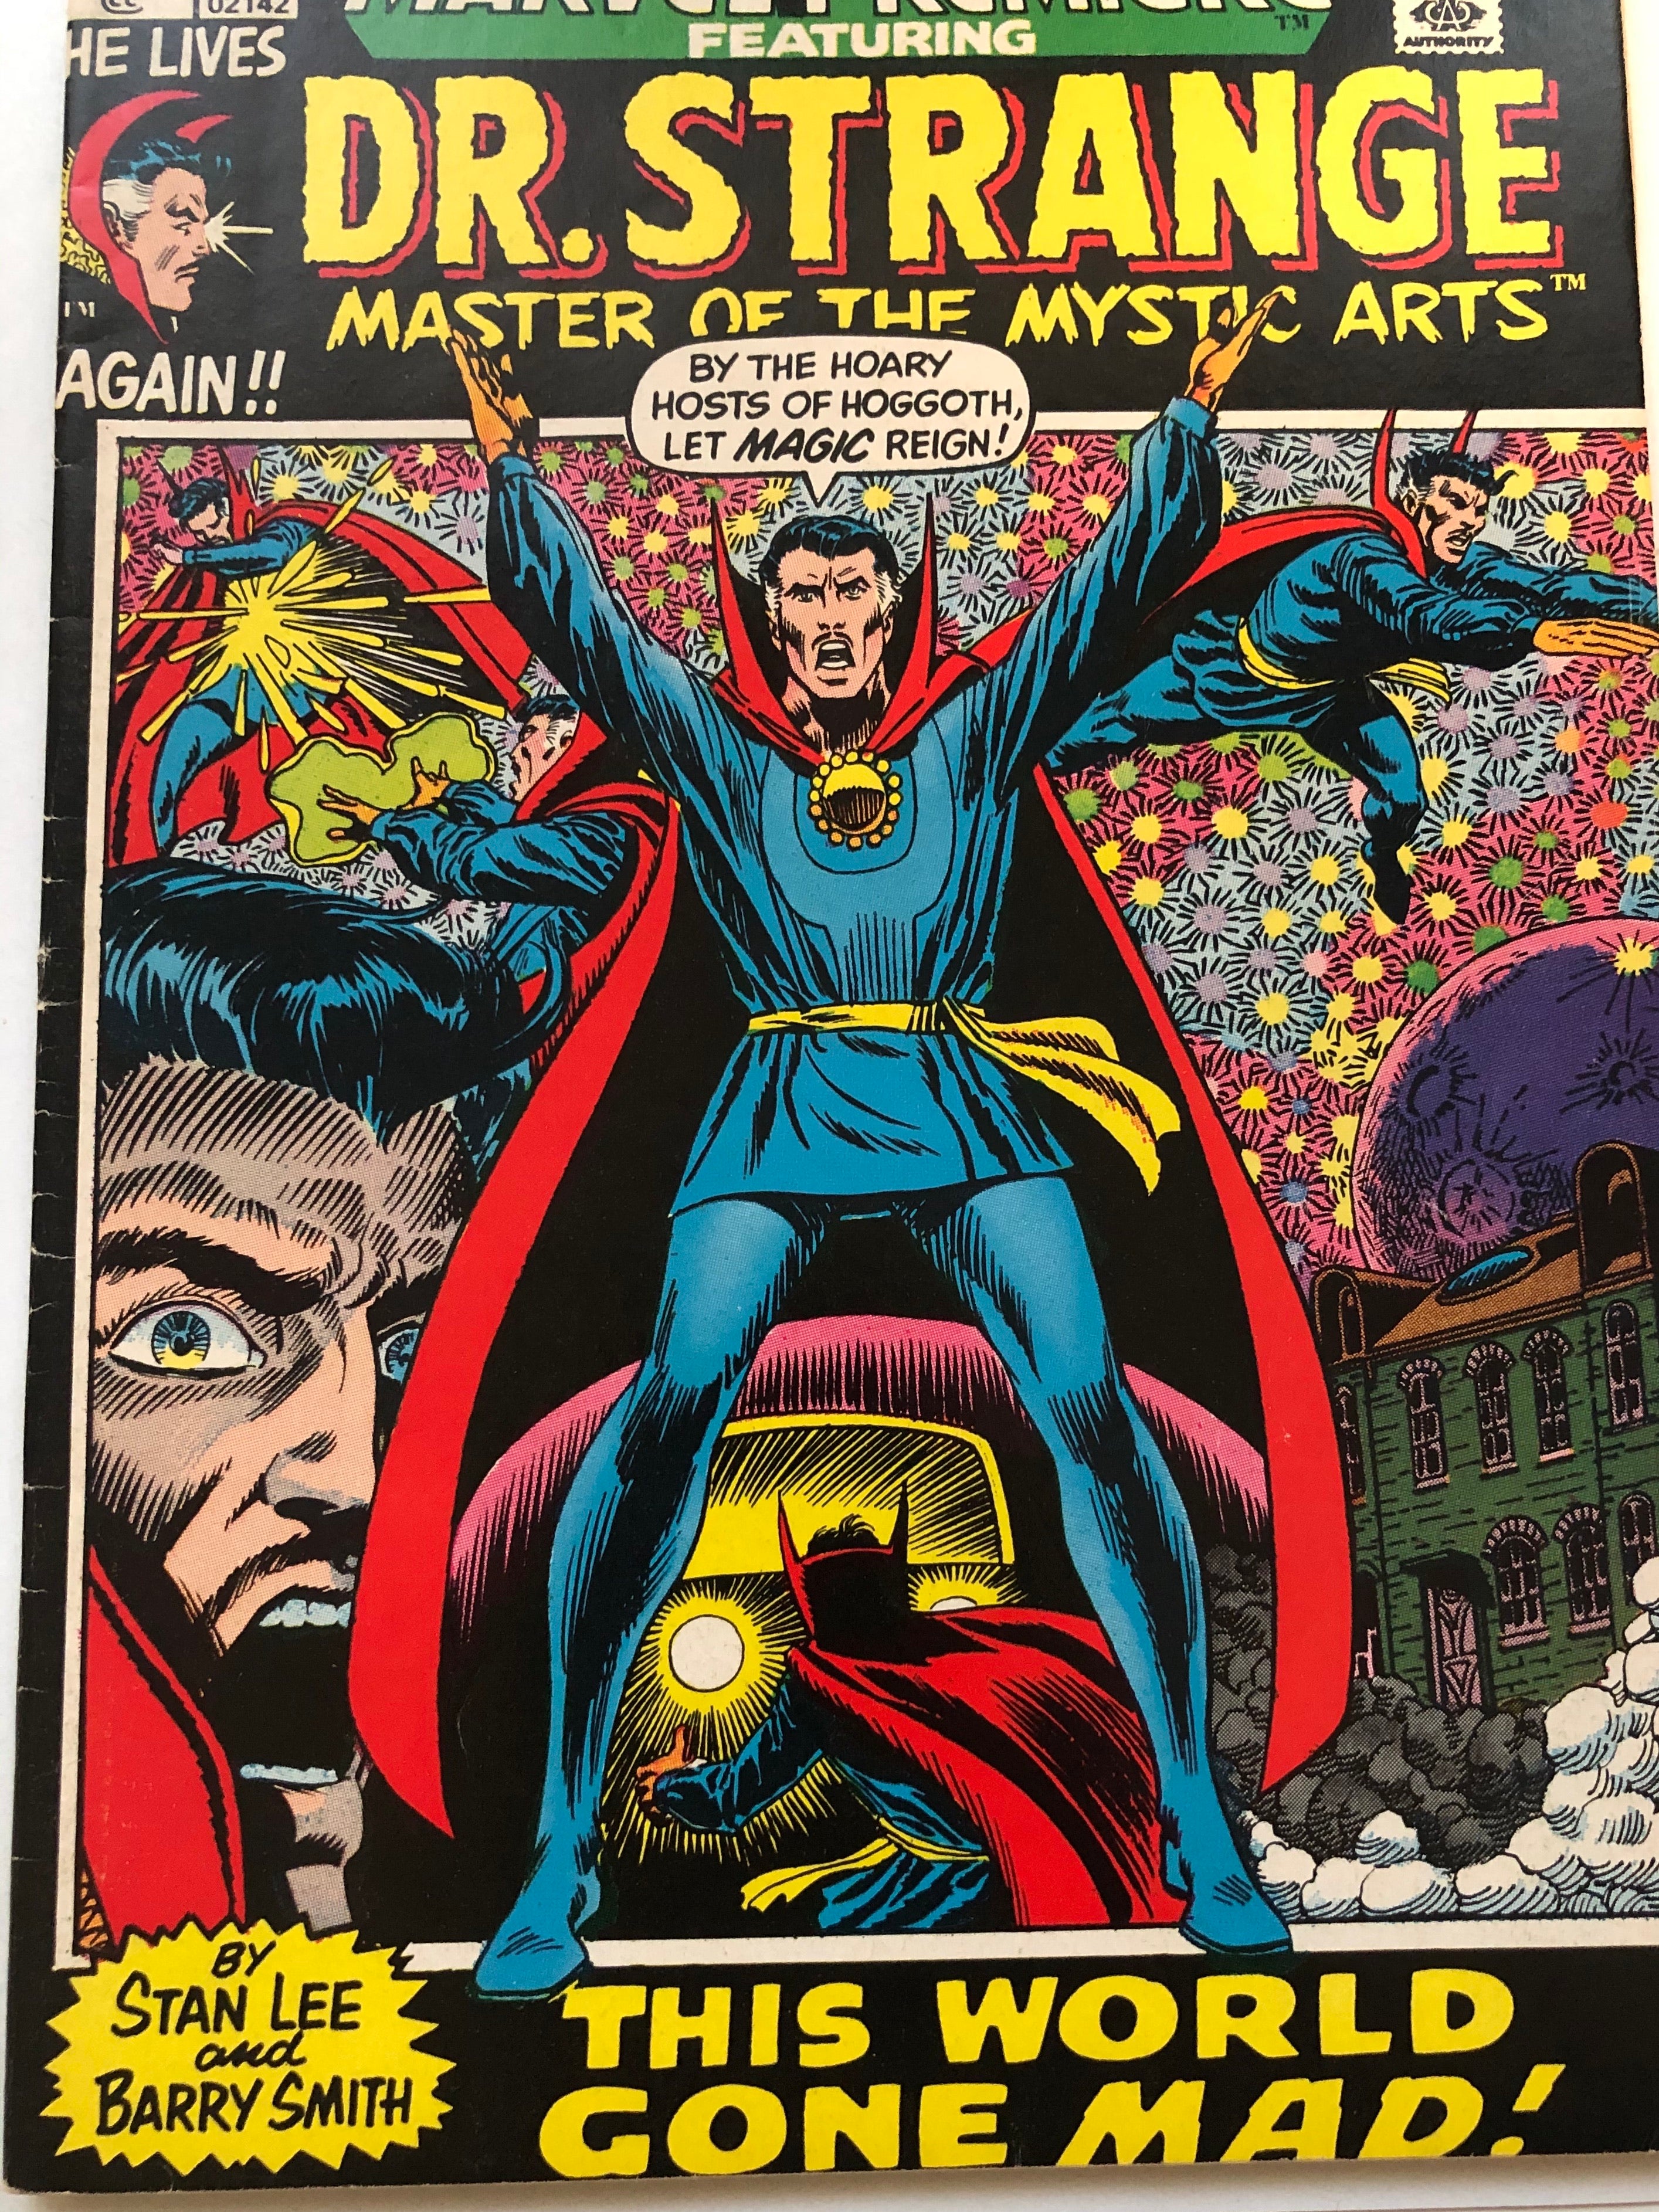 Marvel Premiere Dr. Strange #3 comic 1972